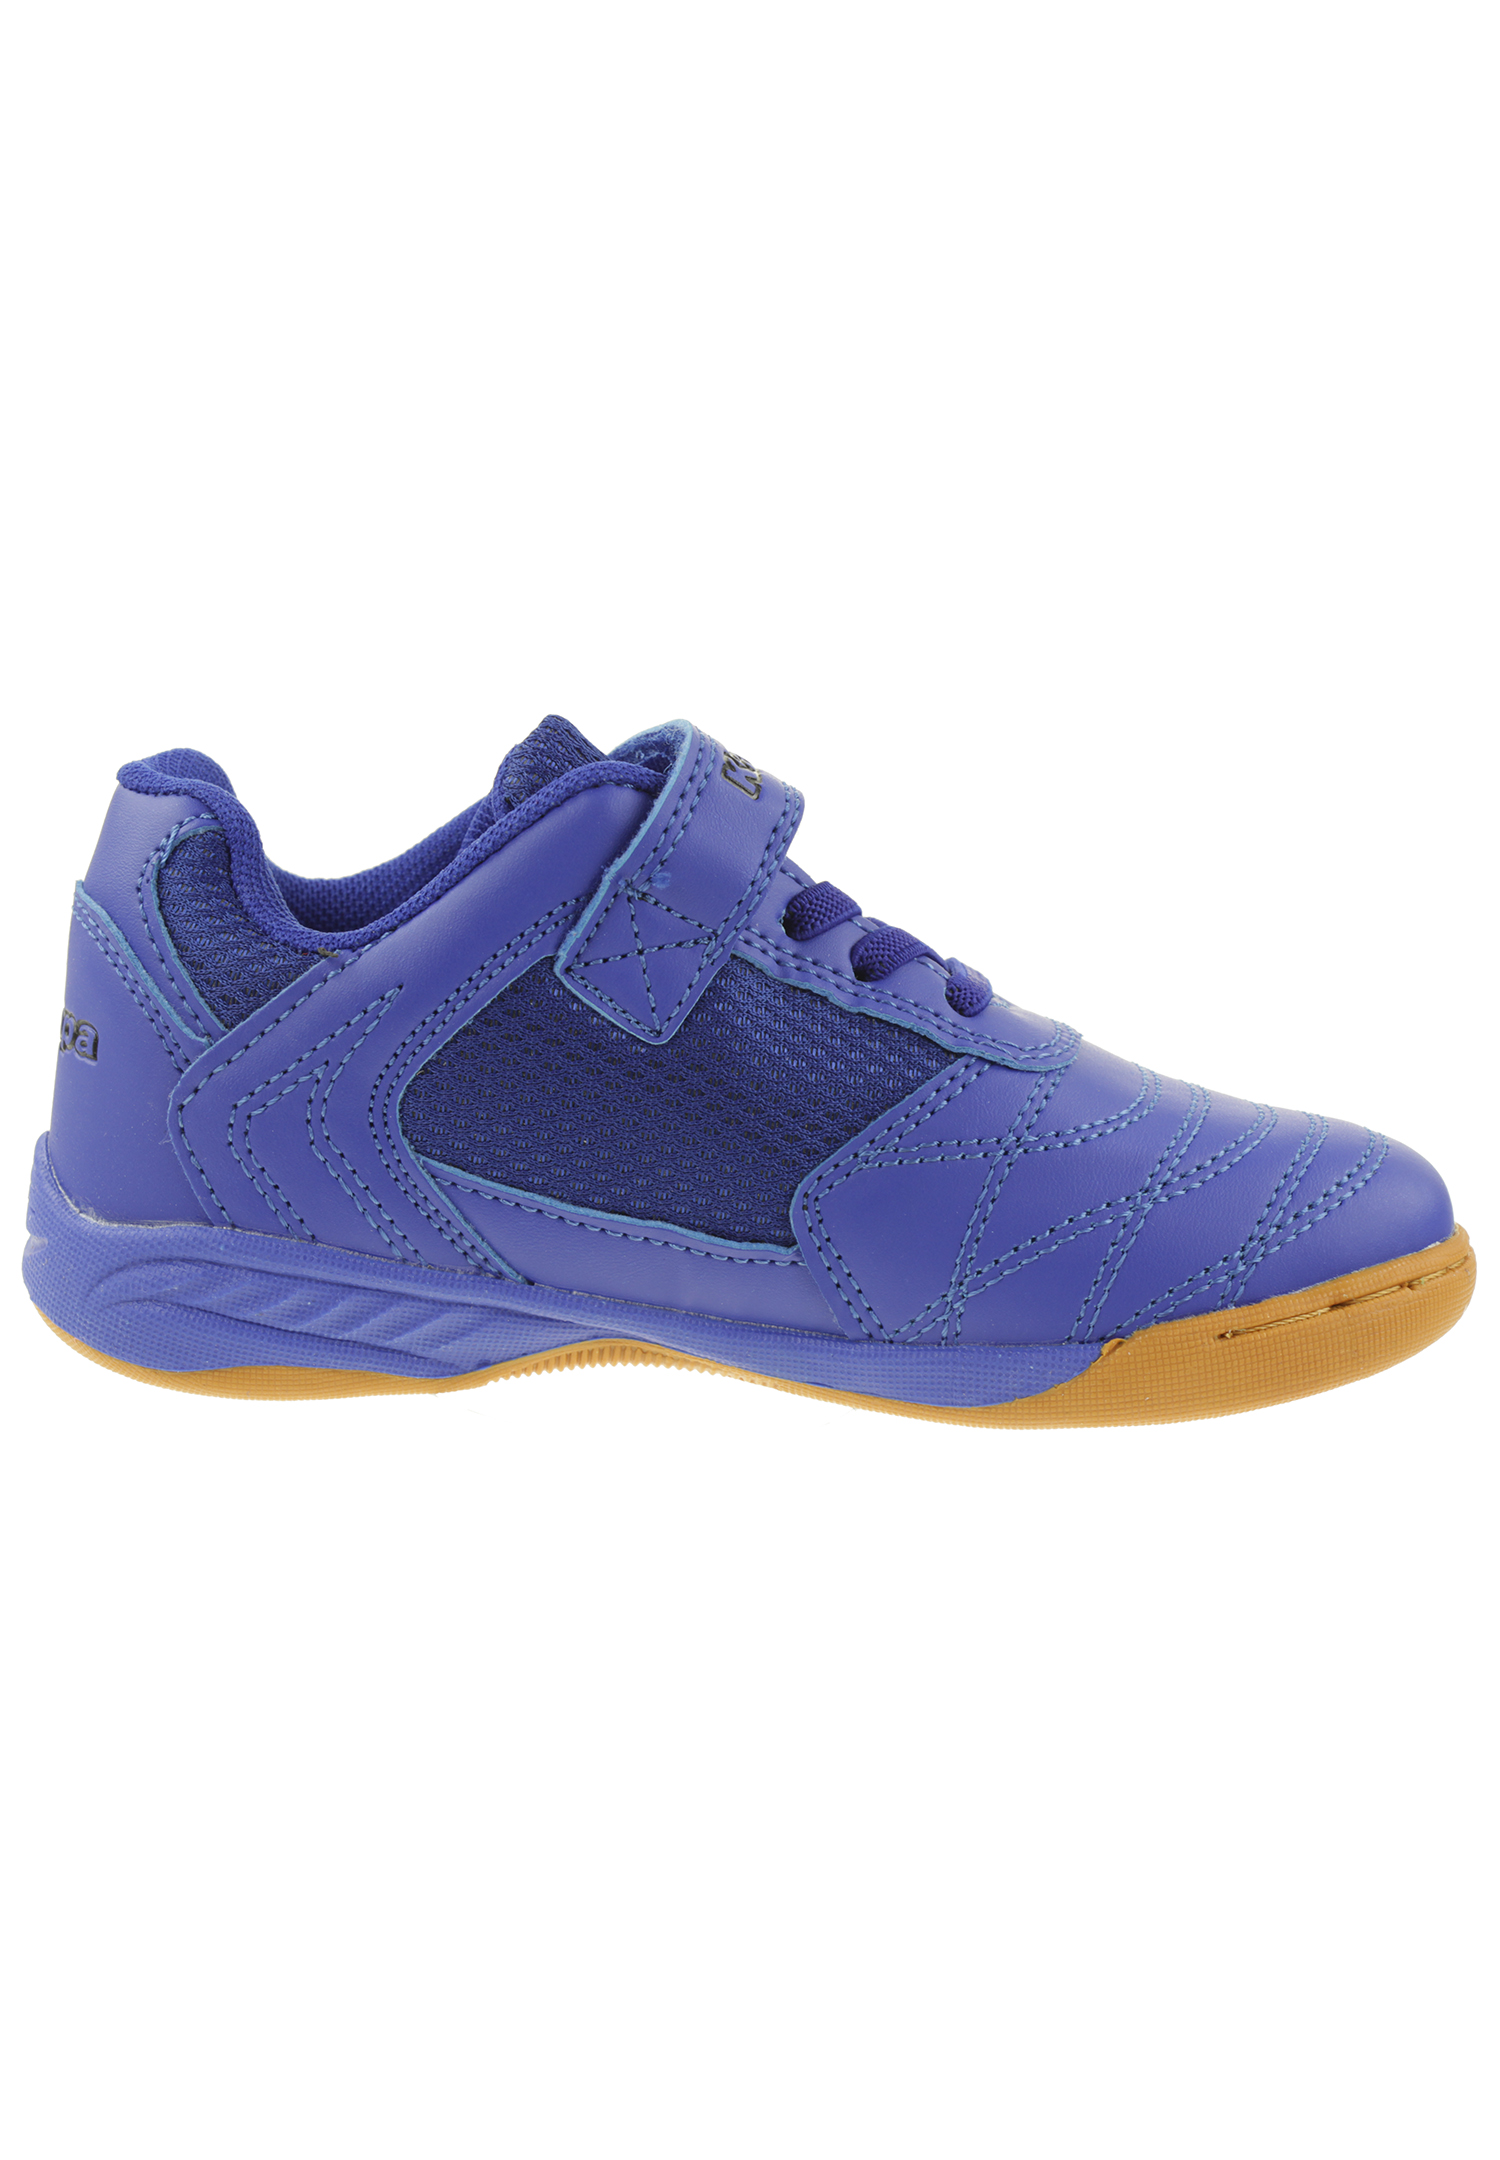 Kinder Kappa Unisex Sneaker Turnschuh blue/black 260765OCK 6011